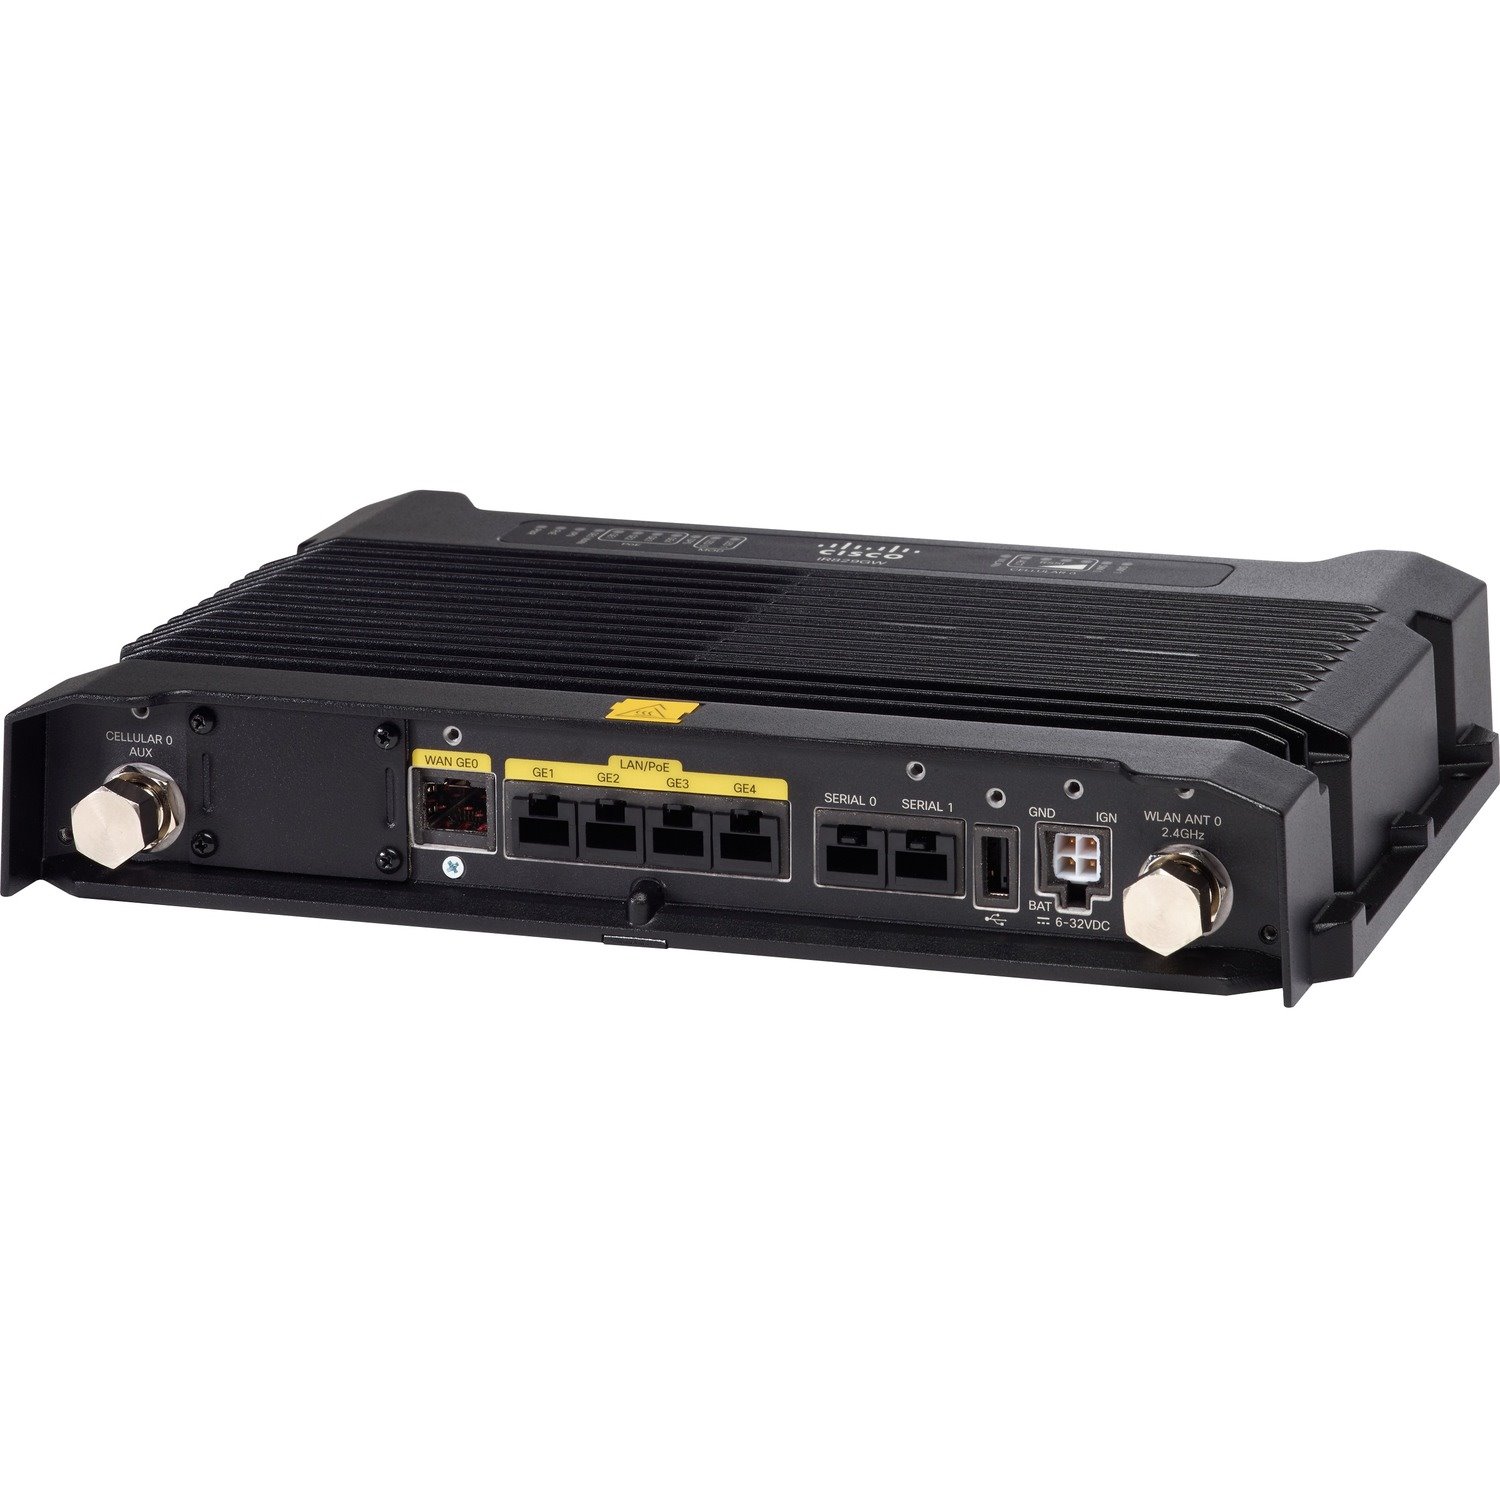 Cisco IR829 Wi-Fi 4 IEEE 802.11n Cellular Modem/Wireless Router